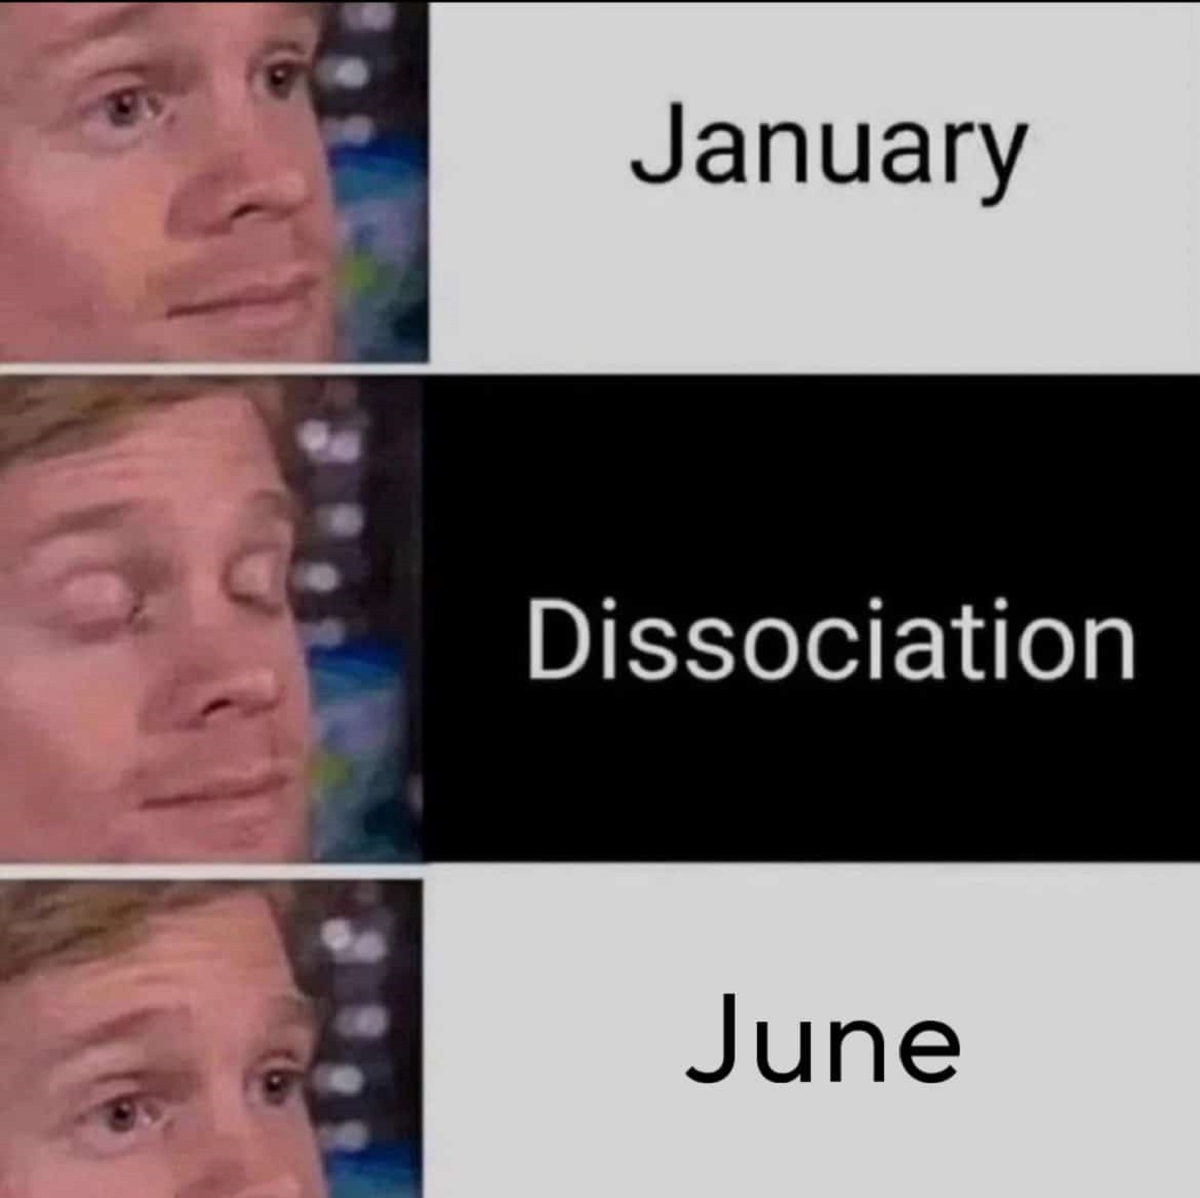 january december meme - January Dissociation June